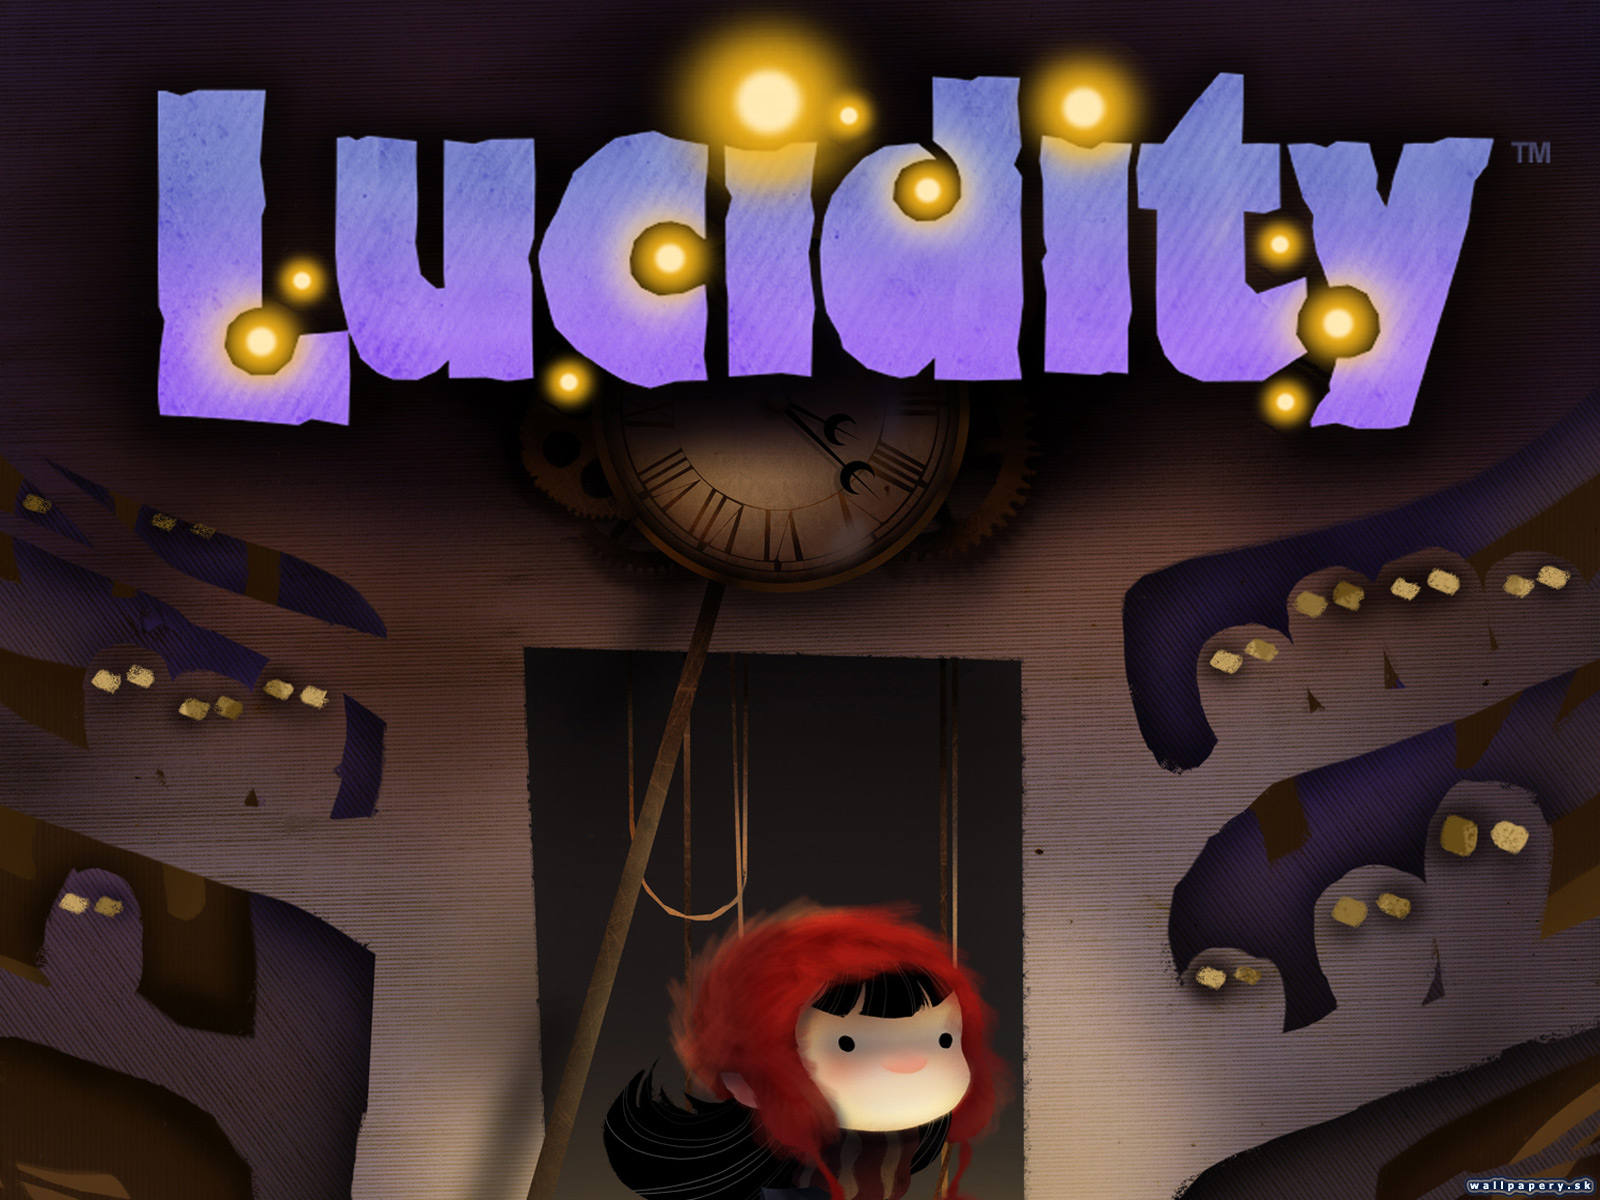 Lucidity - wallpaper 2